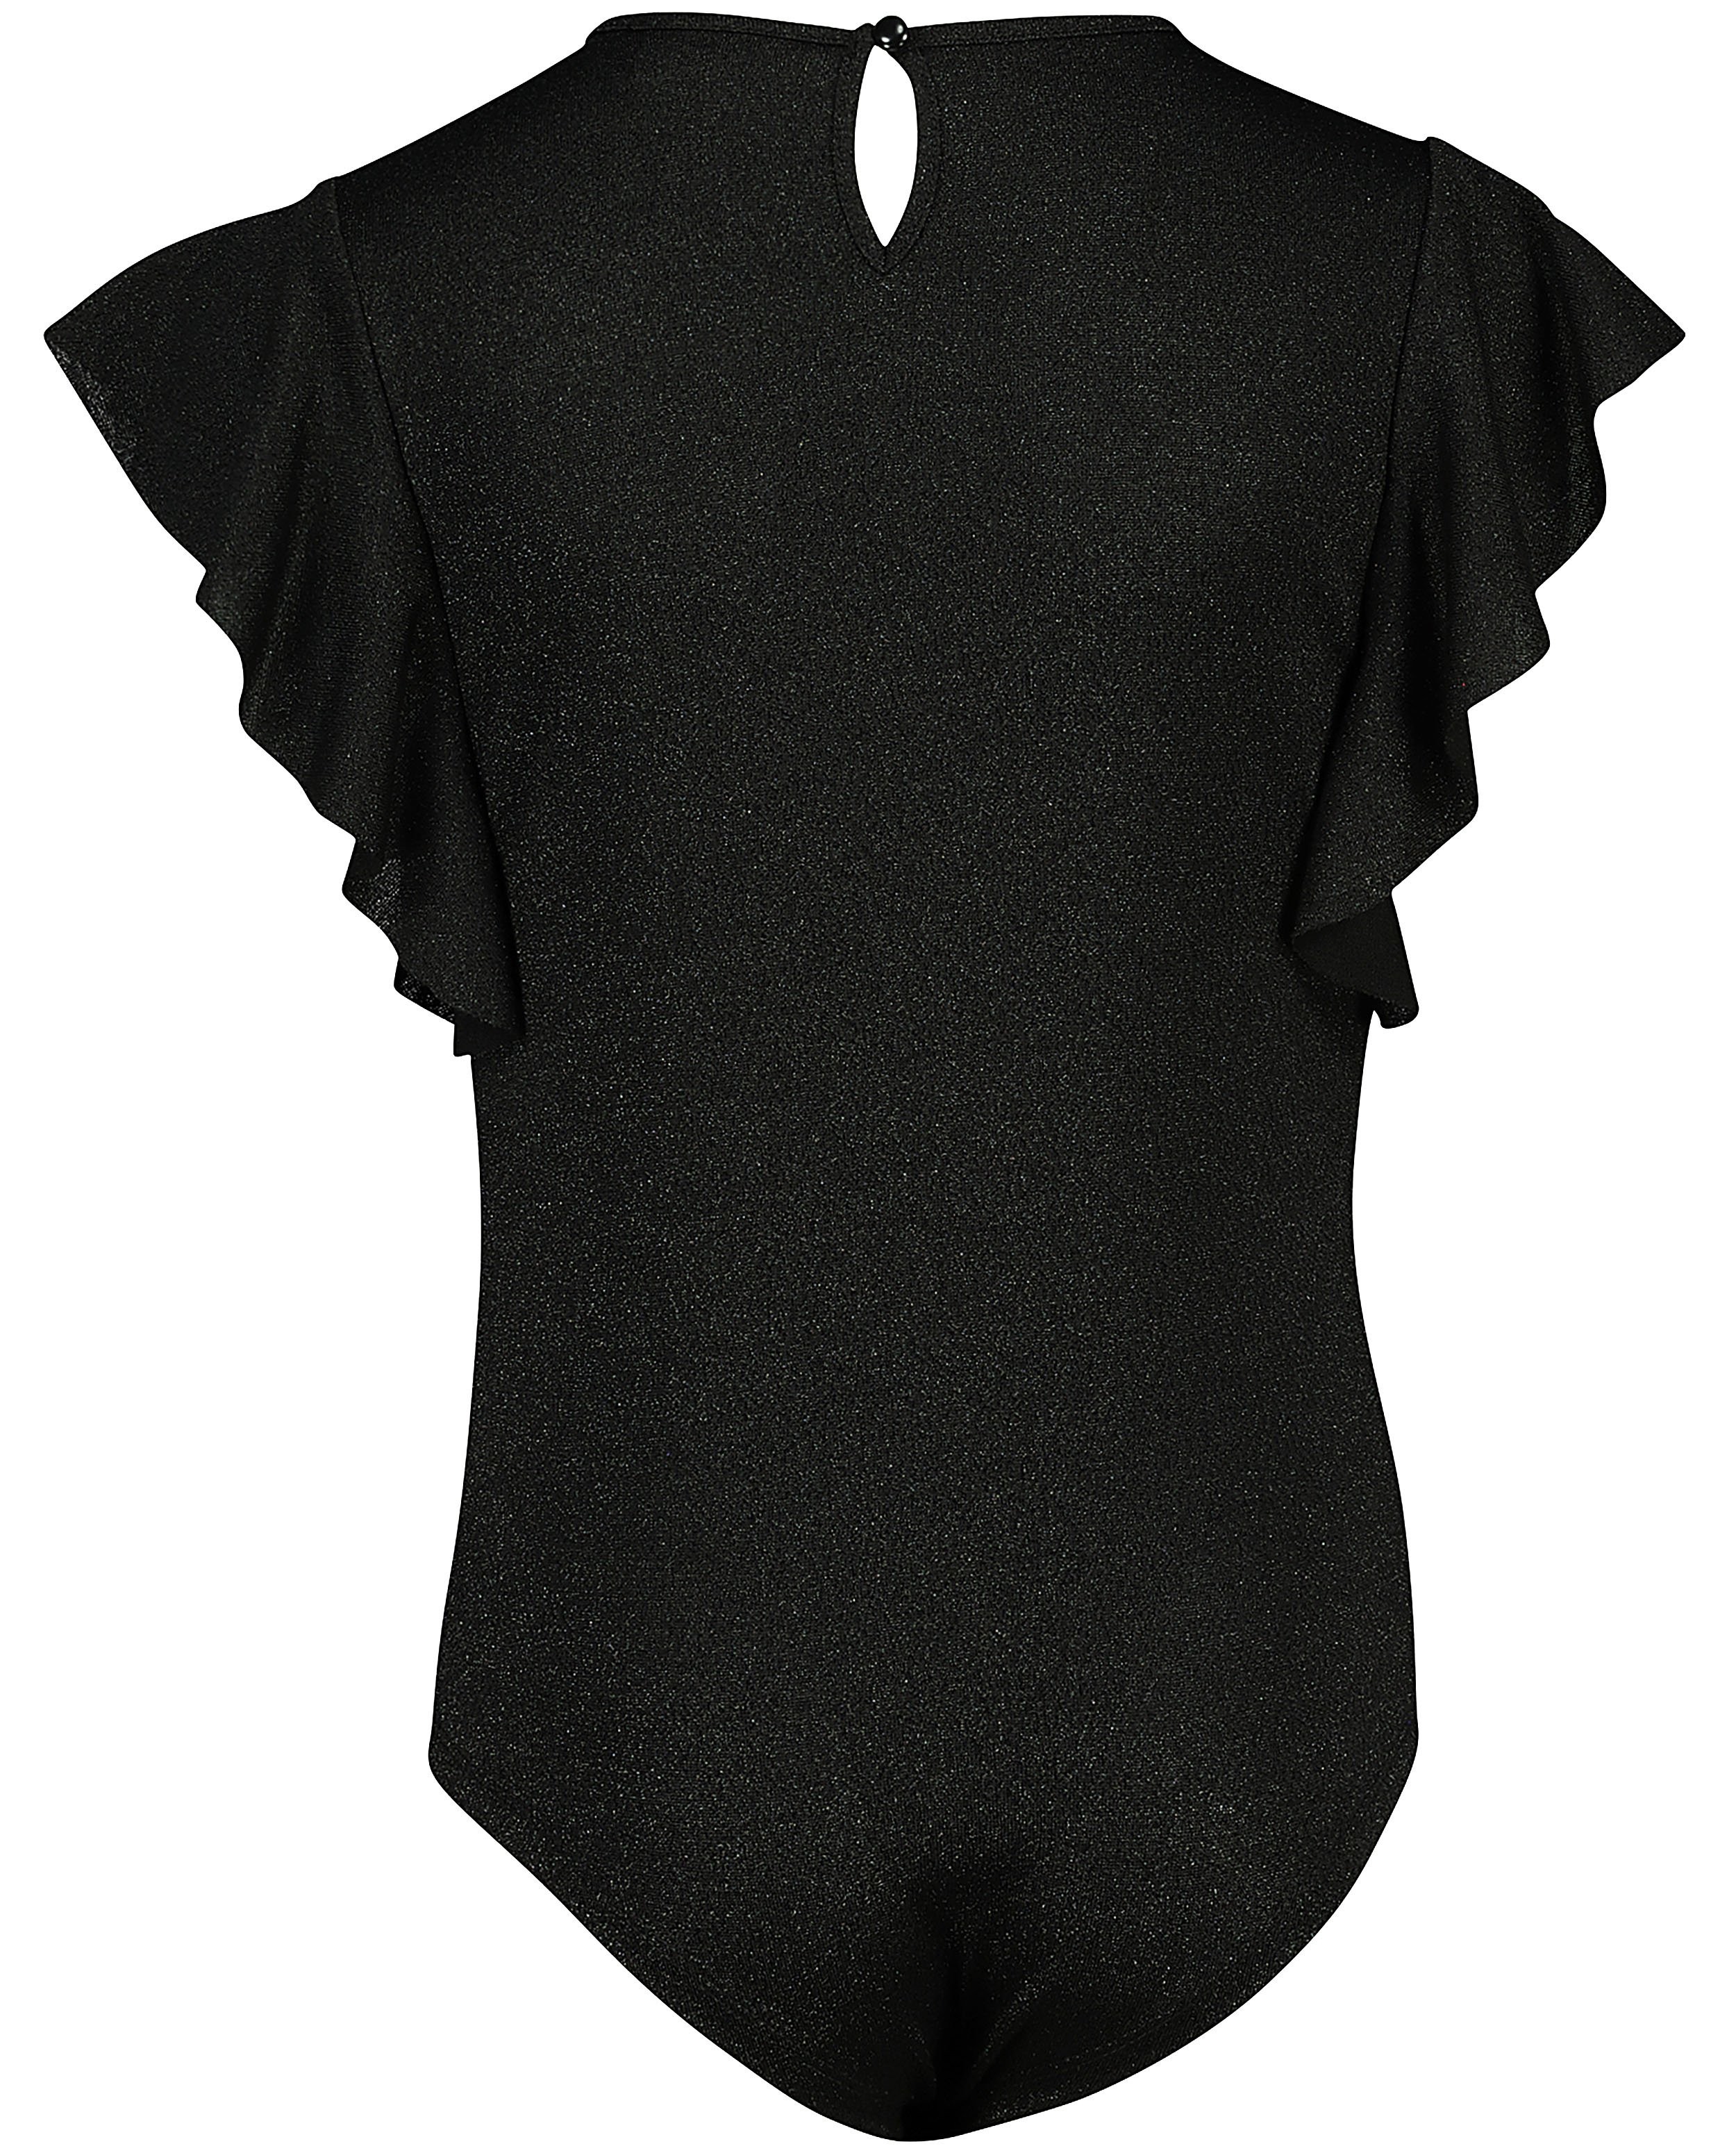 T-shirts - Body noir, fil métallisé